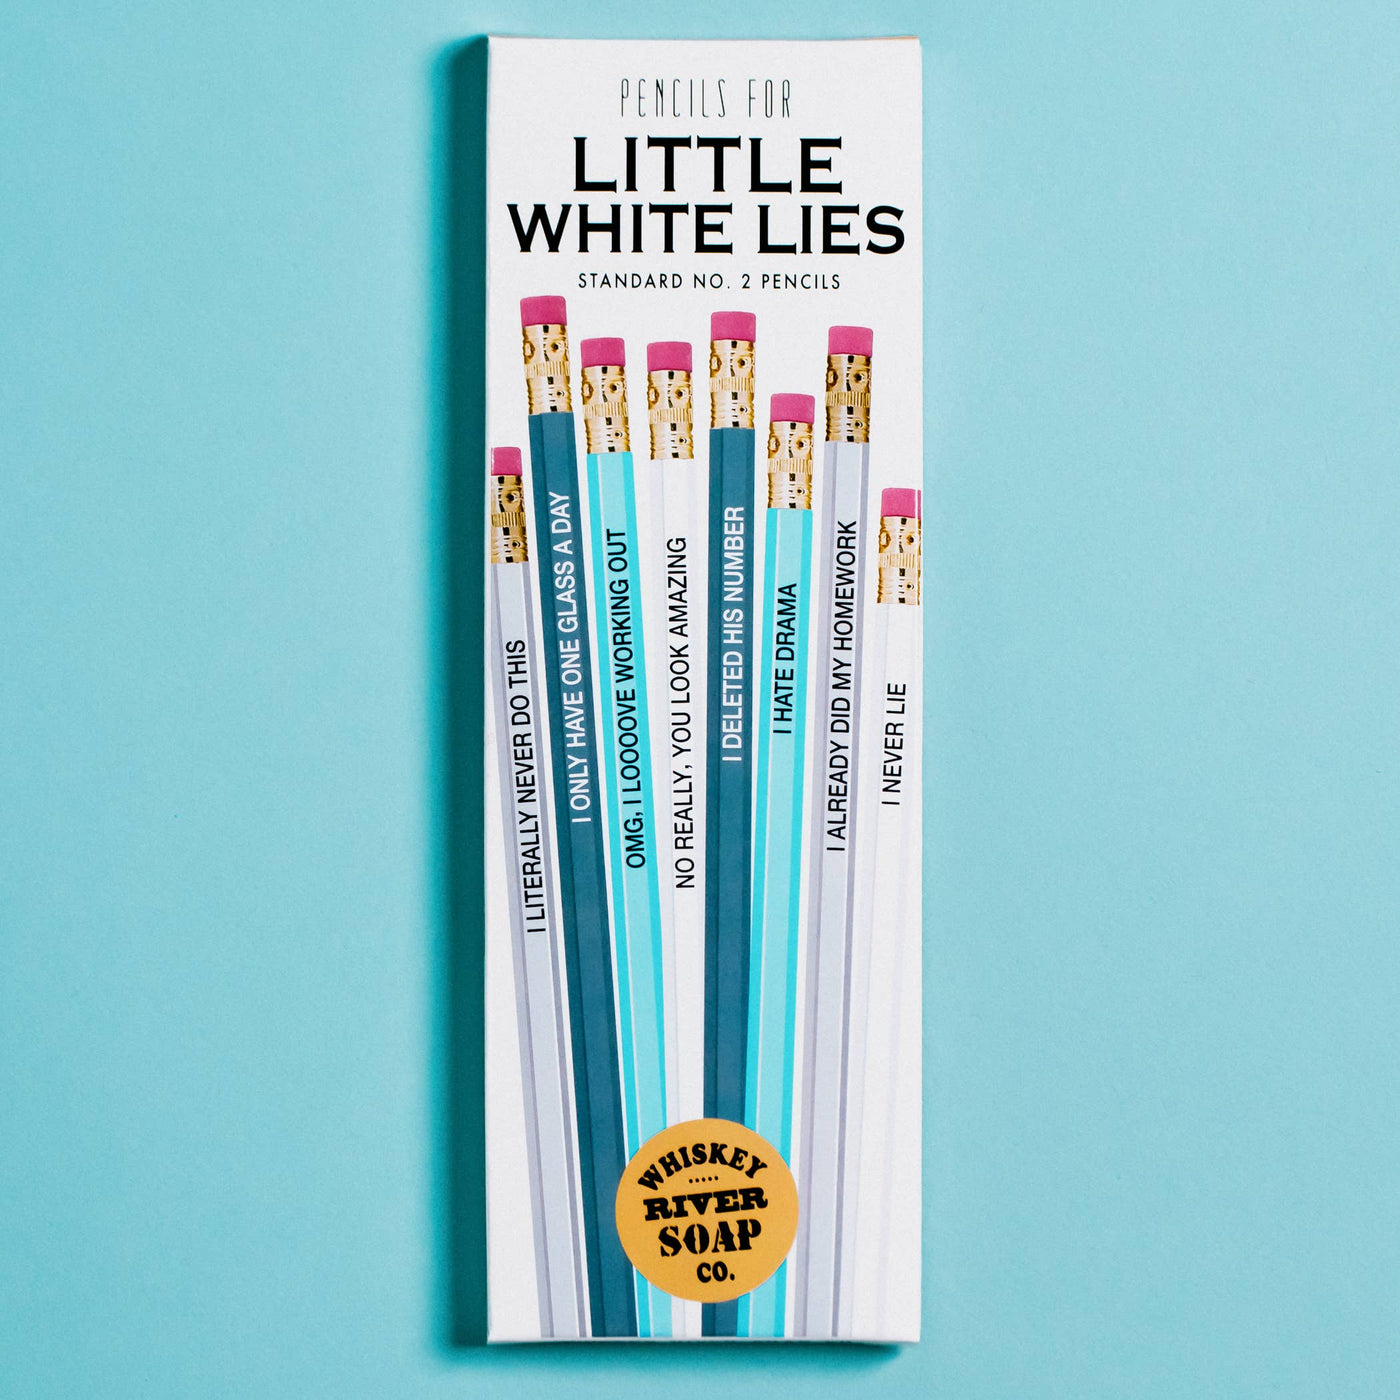 Pencils for Little White Lies Original Style | Funny Pencils